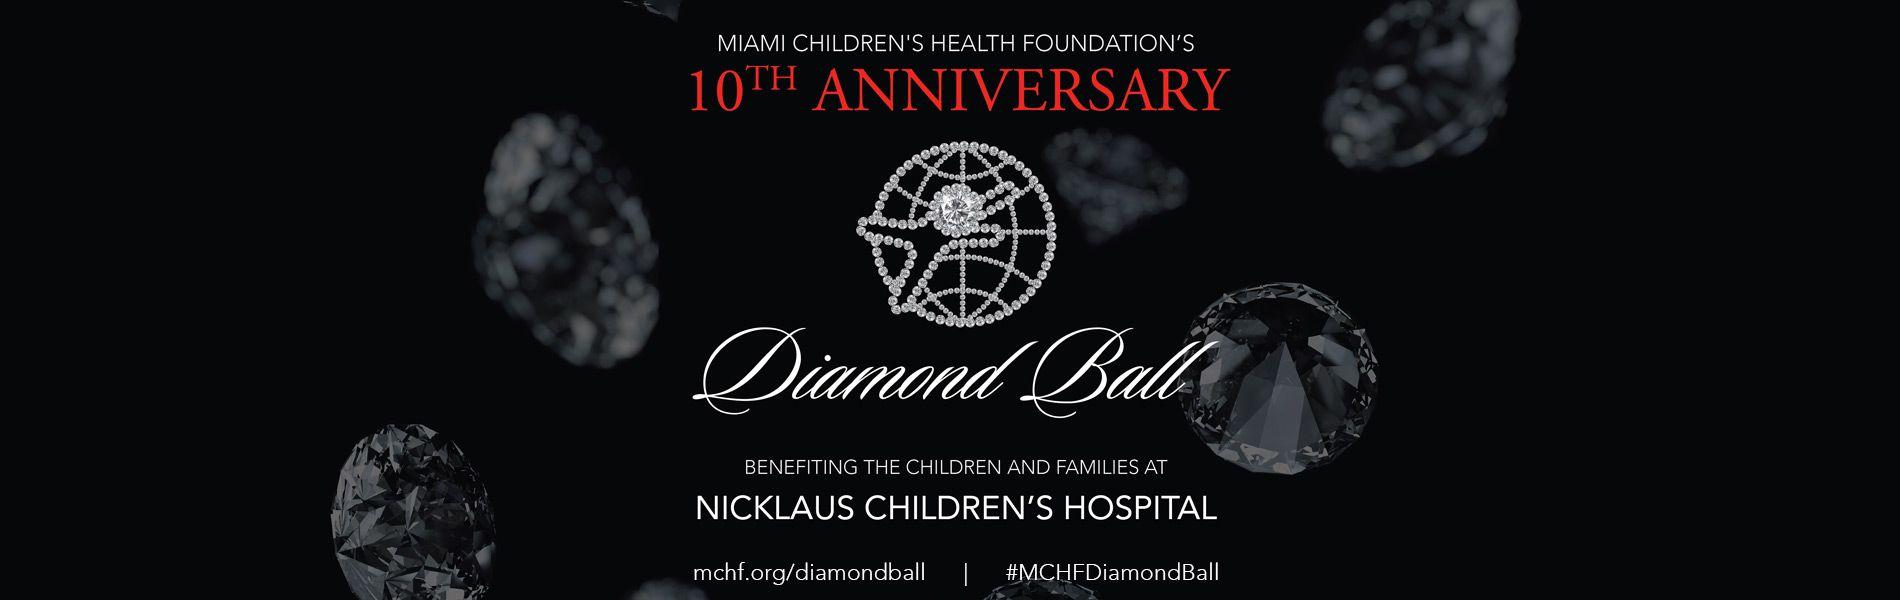 Diamond Ball Logo - Jose Feliciano Honored by Miami Children's Health Foundation at 10th ...